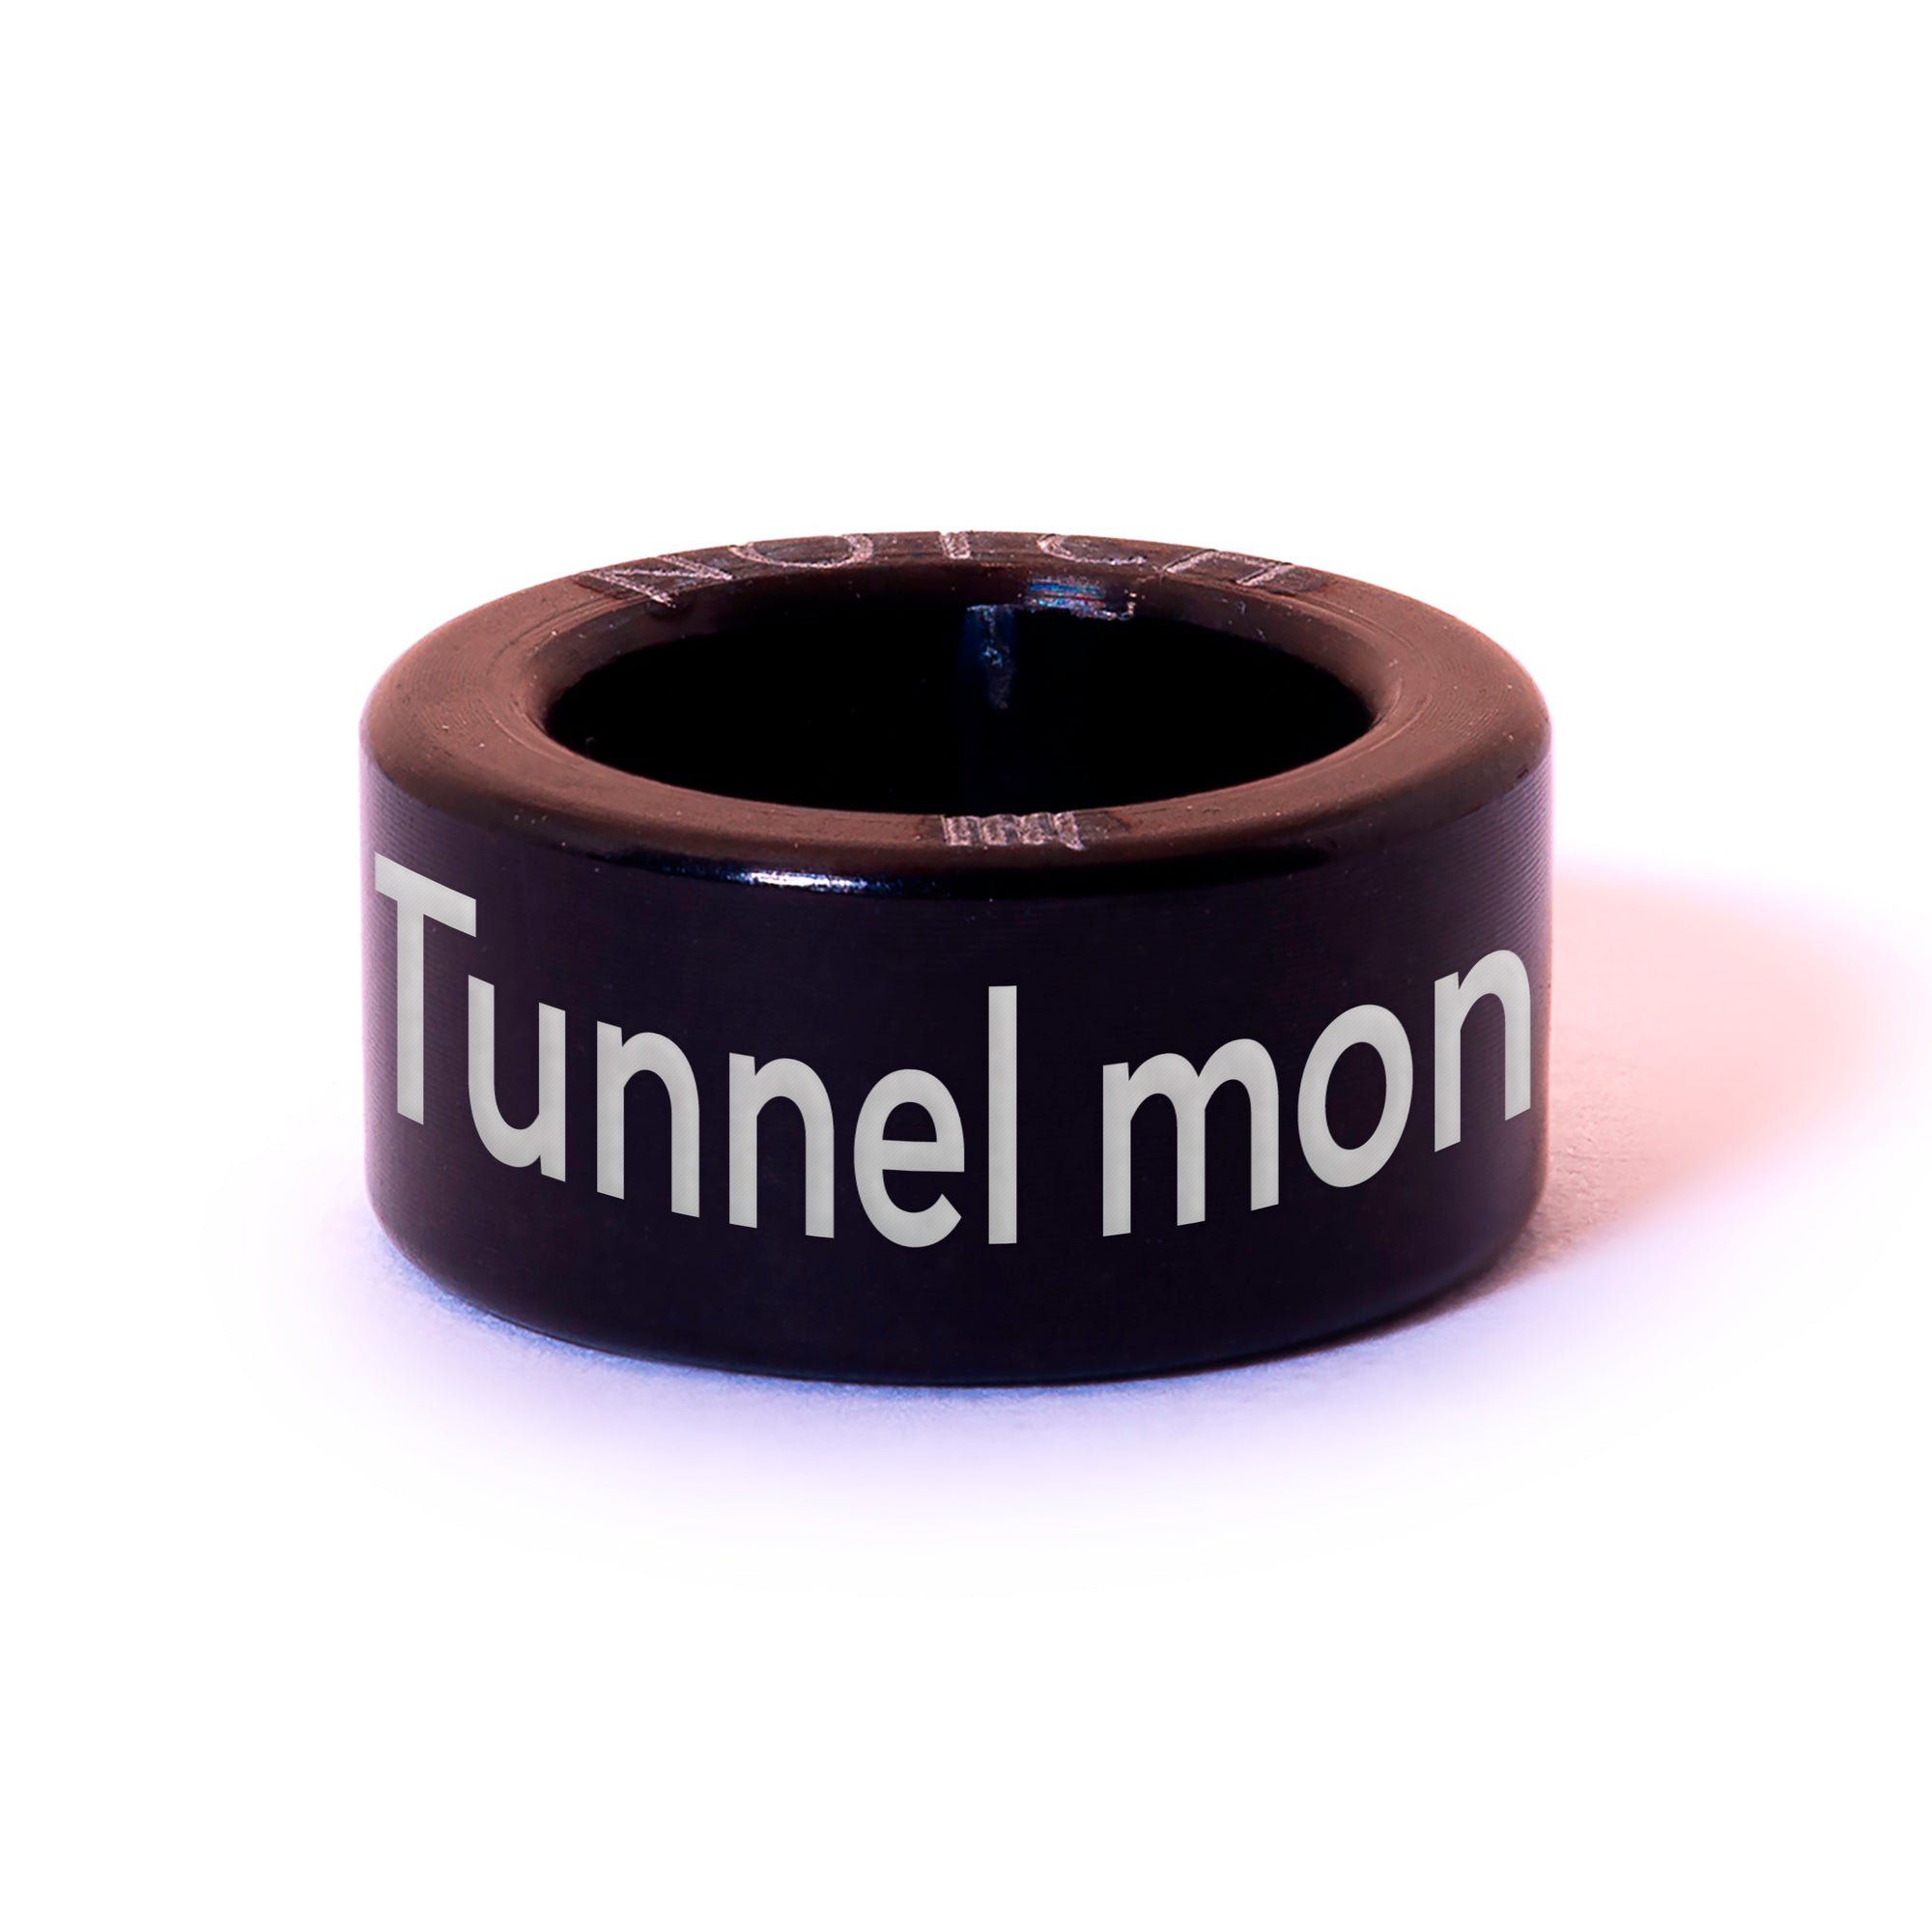 Tunnel Monster NOTCH Charm